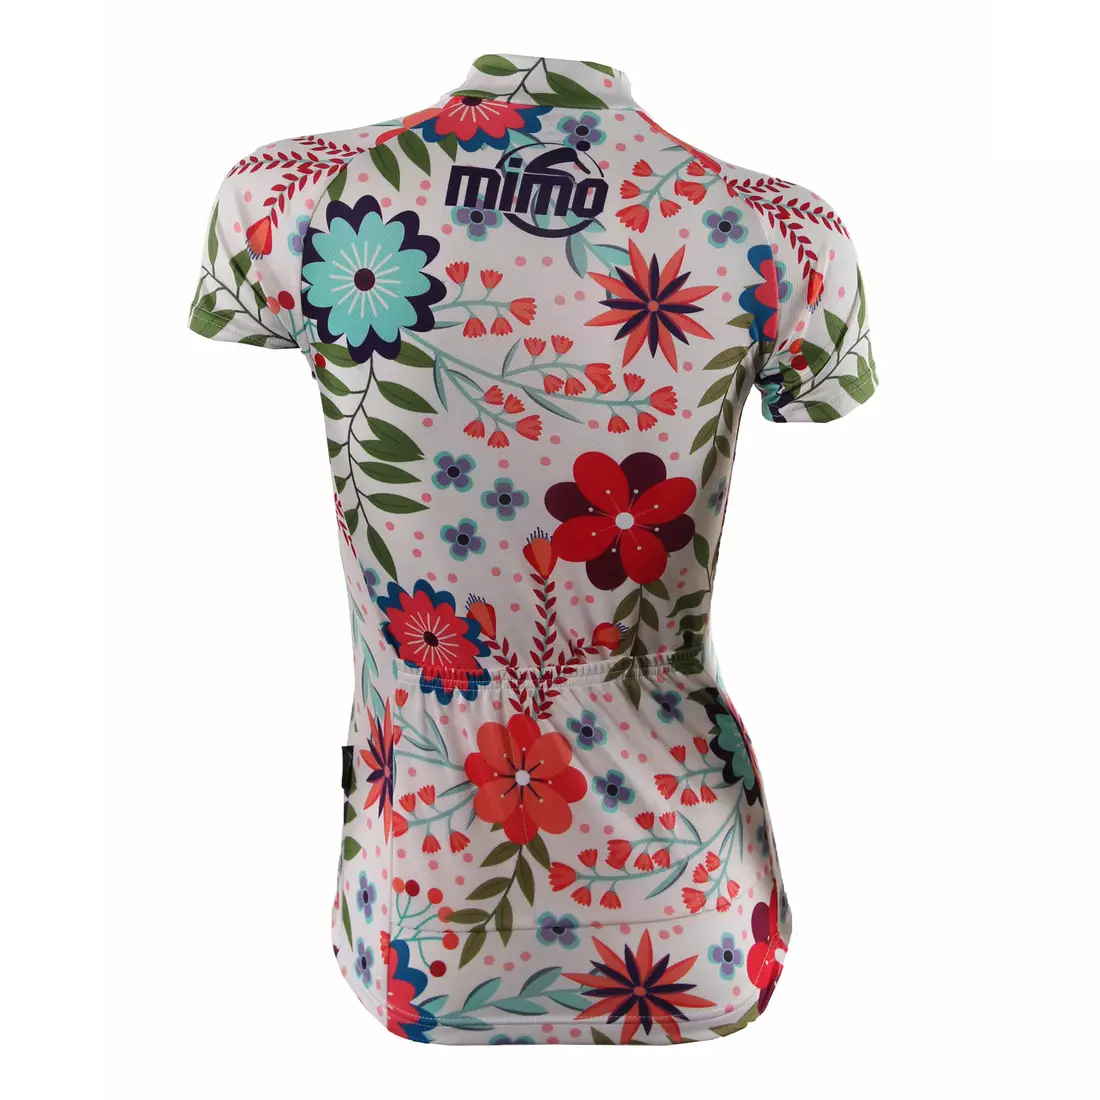 MikeSPORT DESIGN MEADOW women's cycling jersey